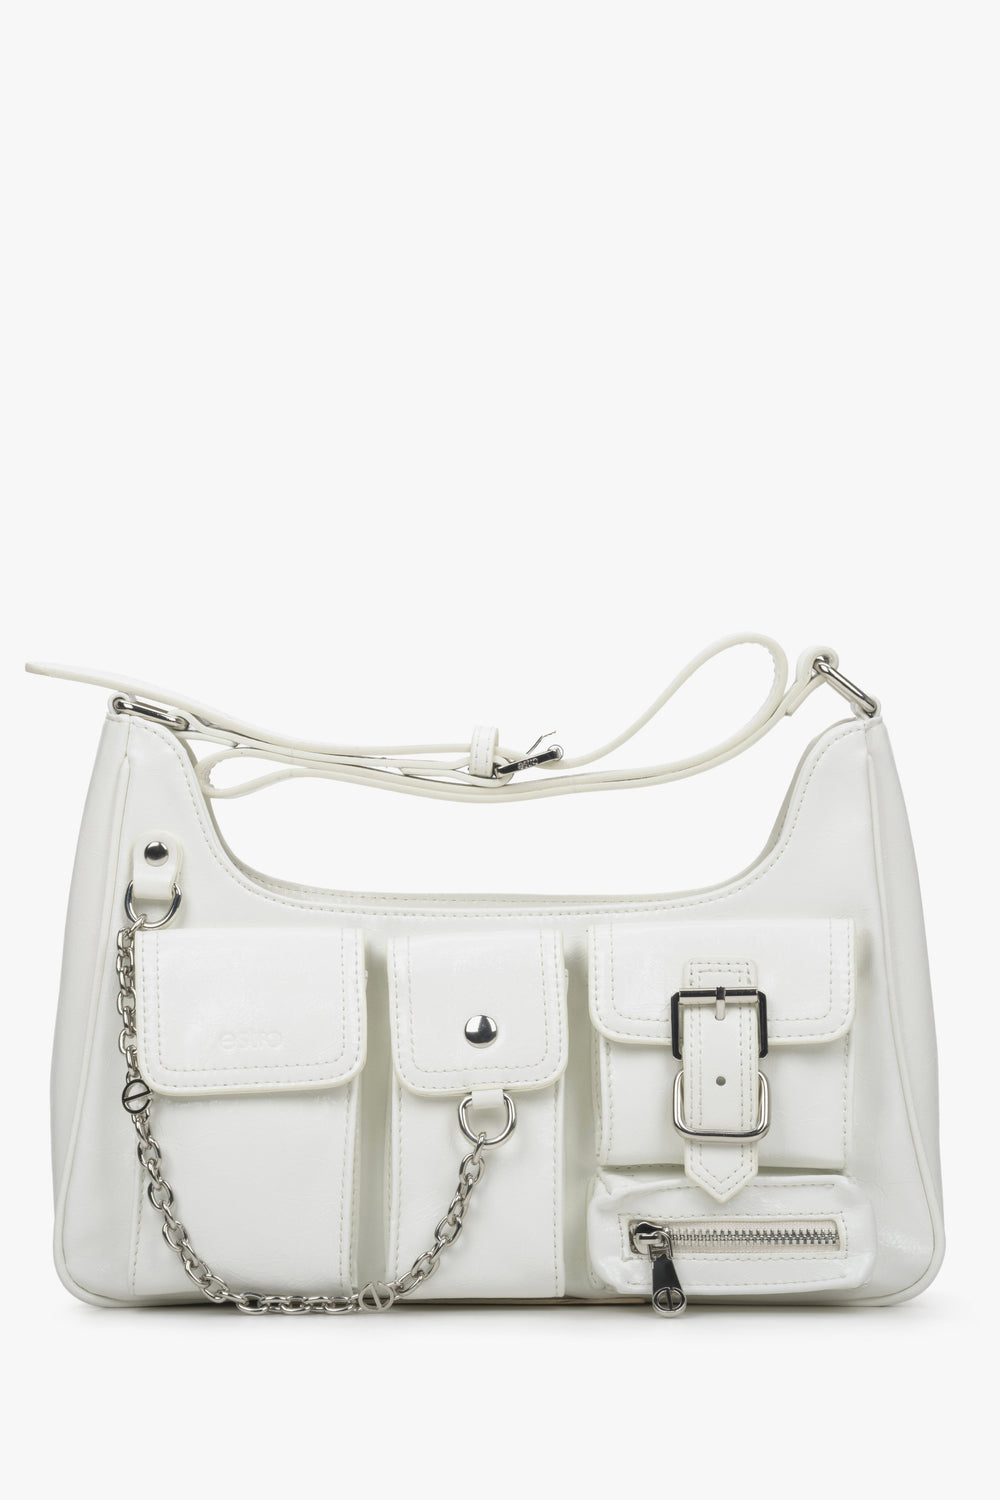 Women's White Shoulder Bag with Pockets made of Genuine Leather Estro ER00114407.